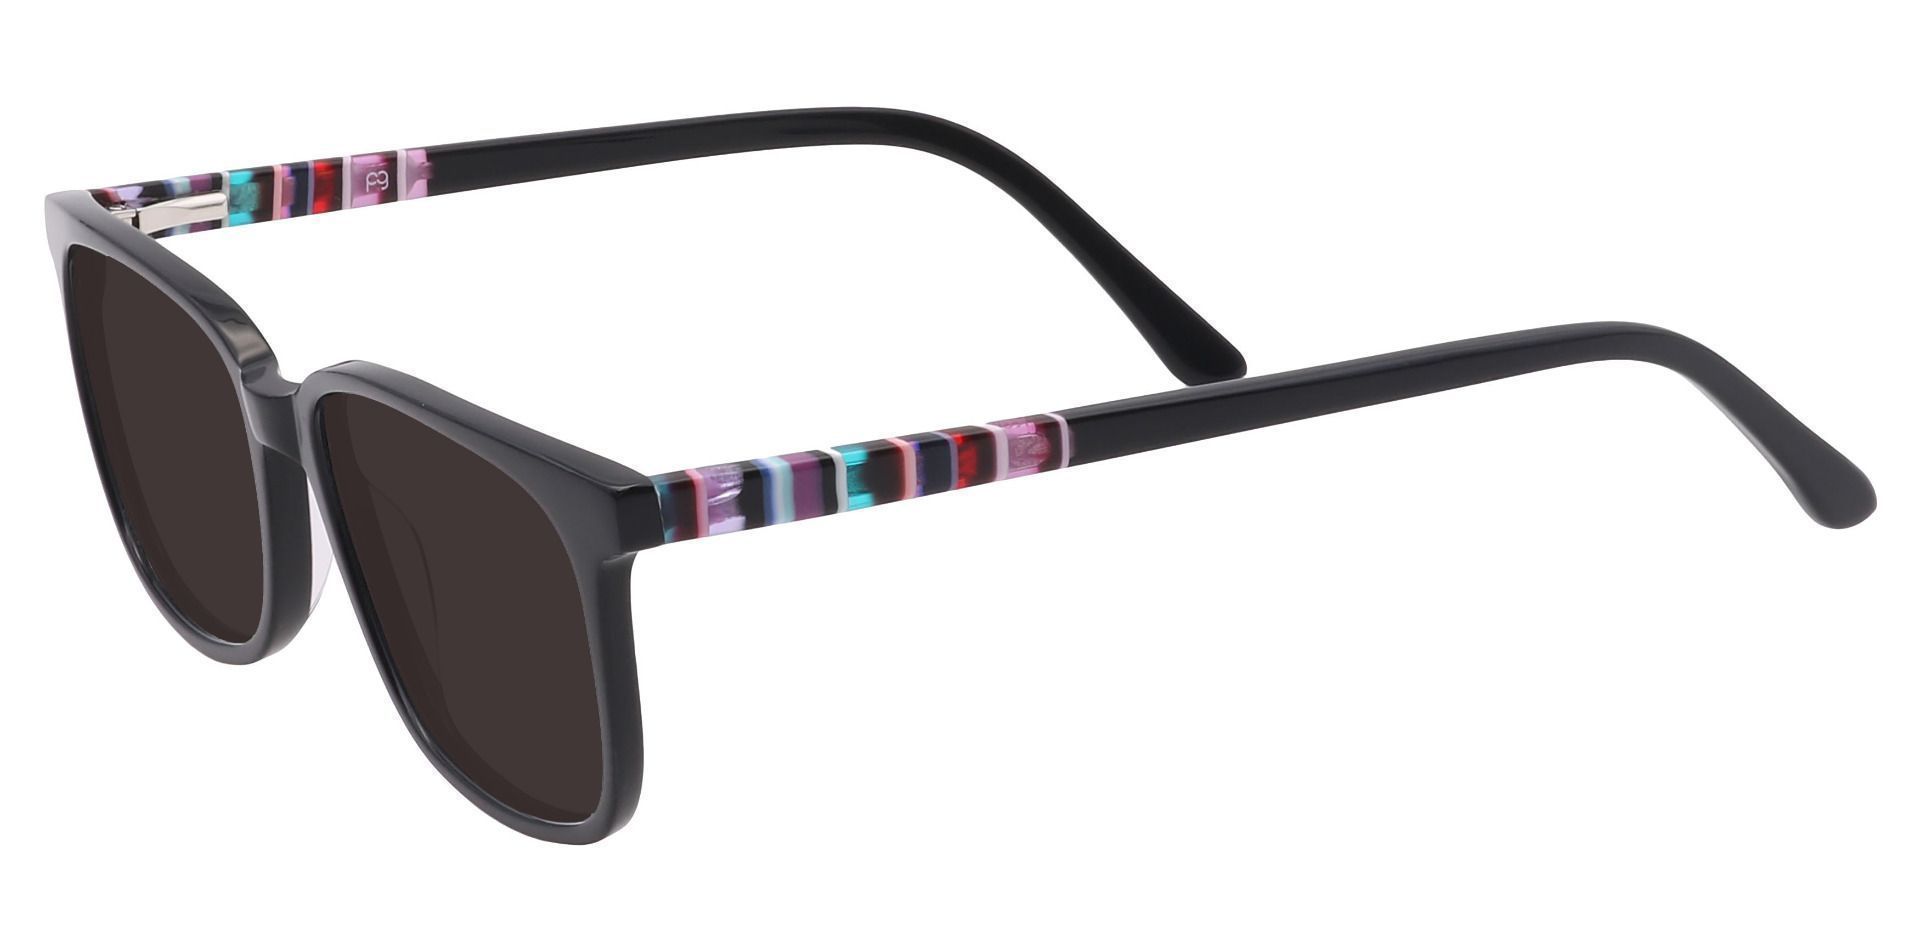 Fern Square Reading Sunglasses - Black Frame With Gray Lenses